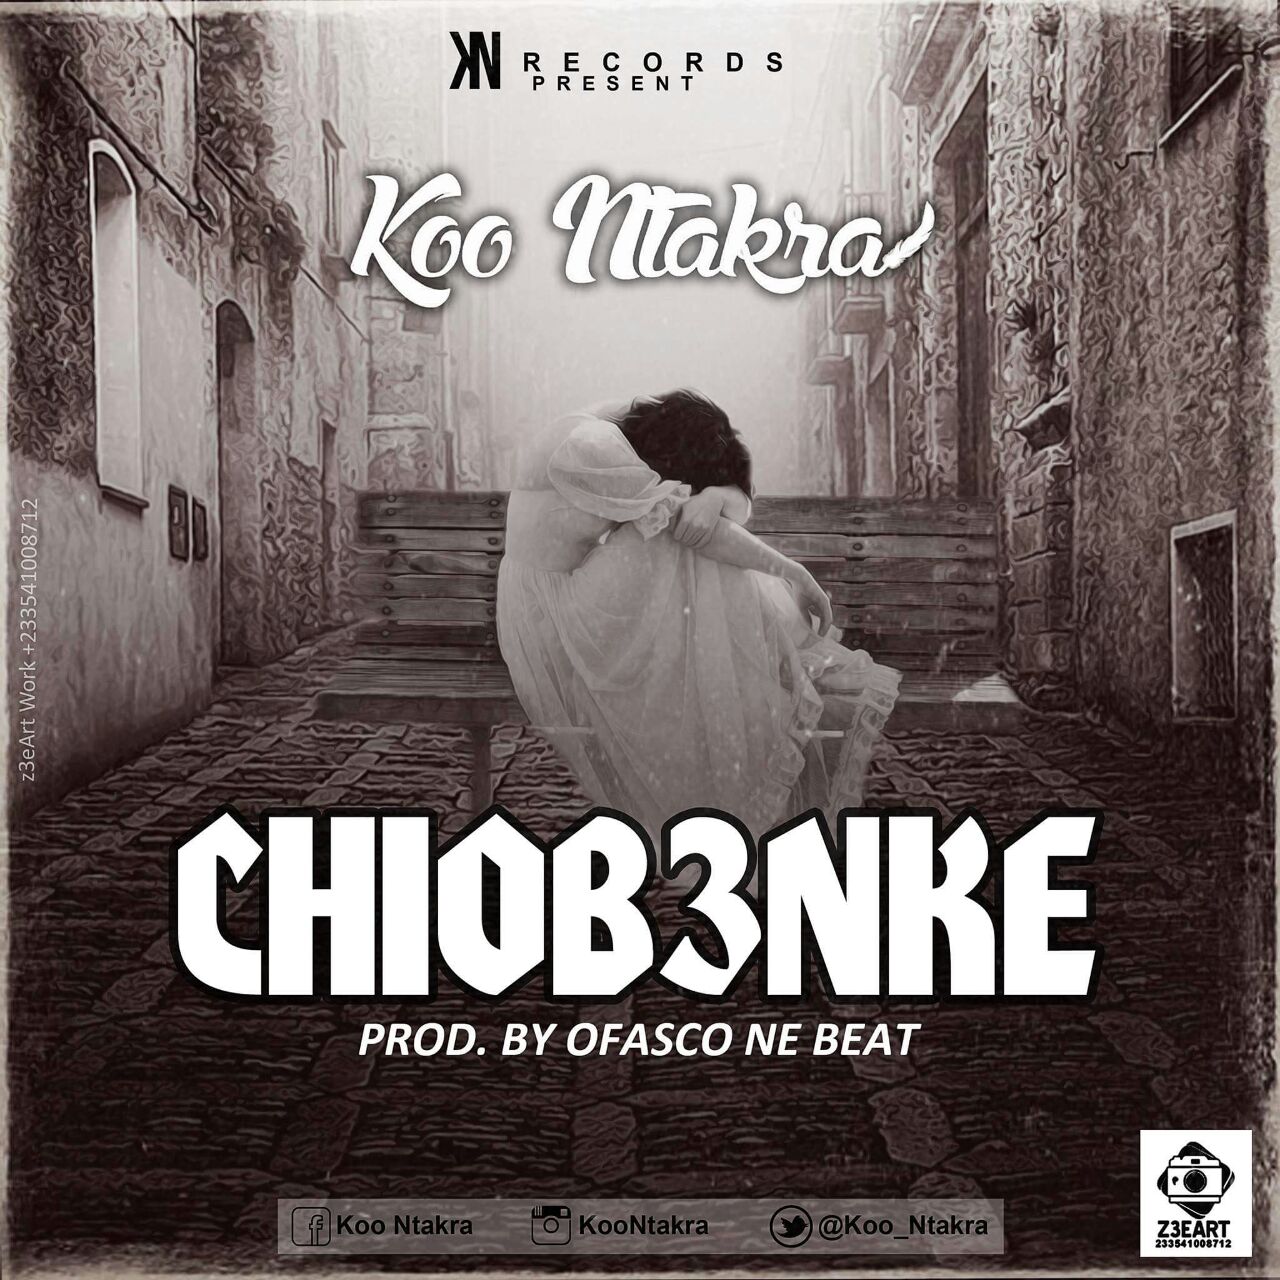 Koo Ntakra – Tchiobenke (Produced by Ofasco)